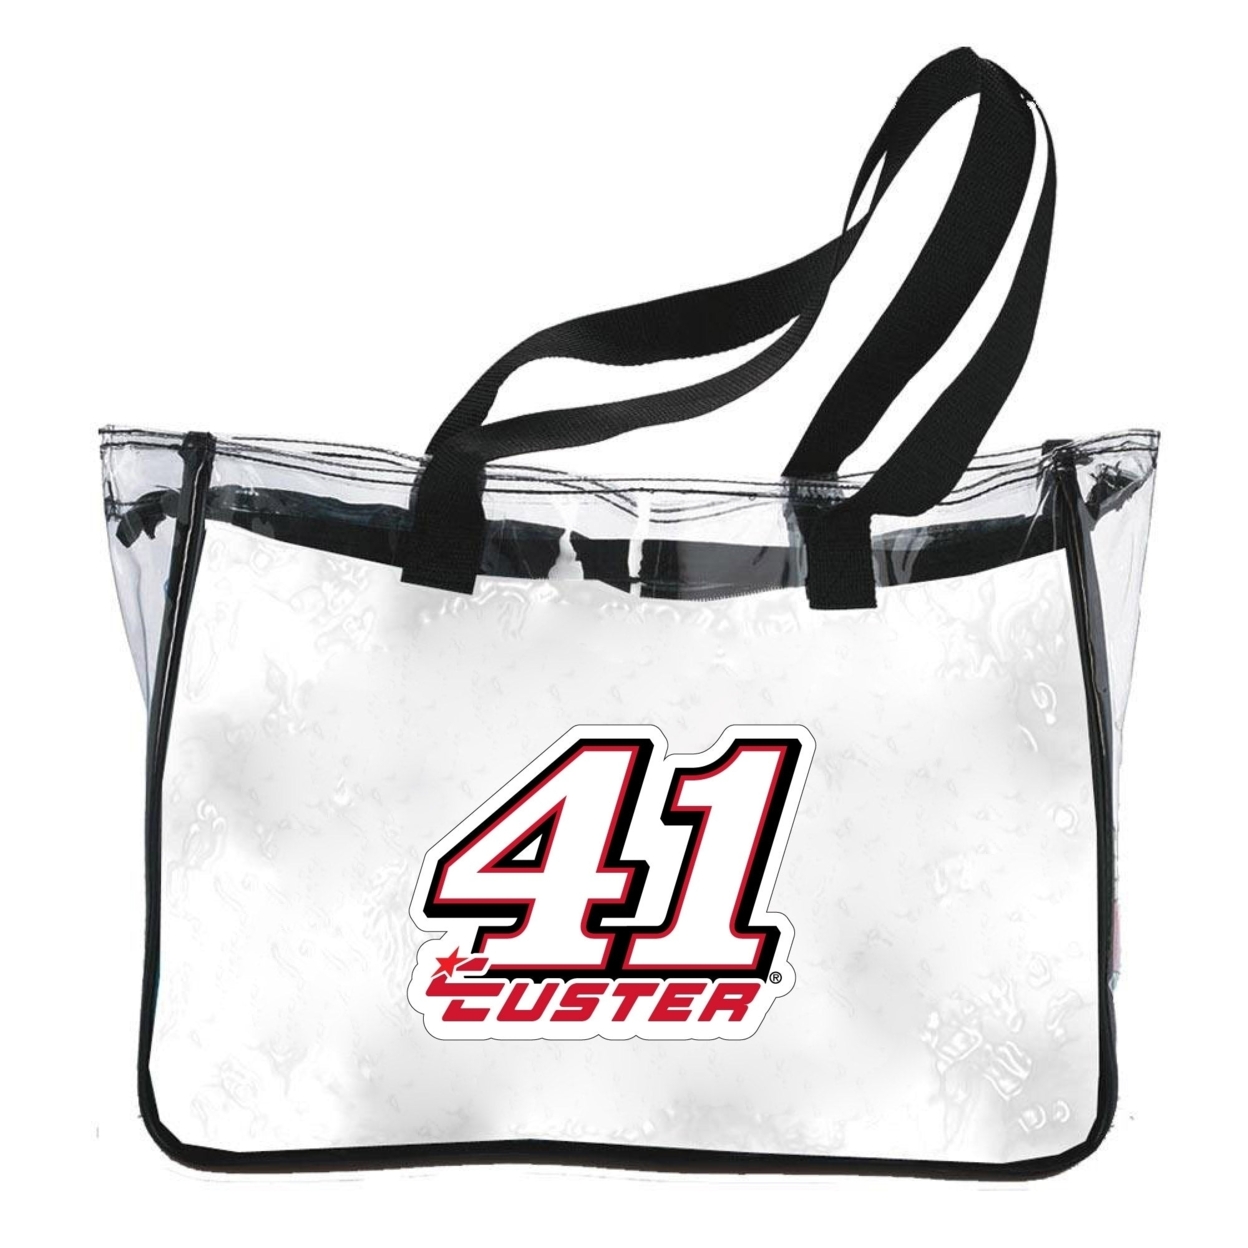 CC Cole Custer #41 NASCAR Plastic Clear Tote Bag